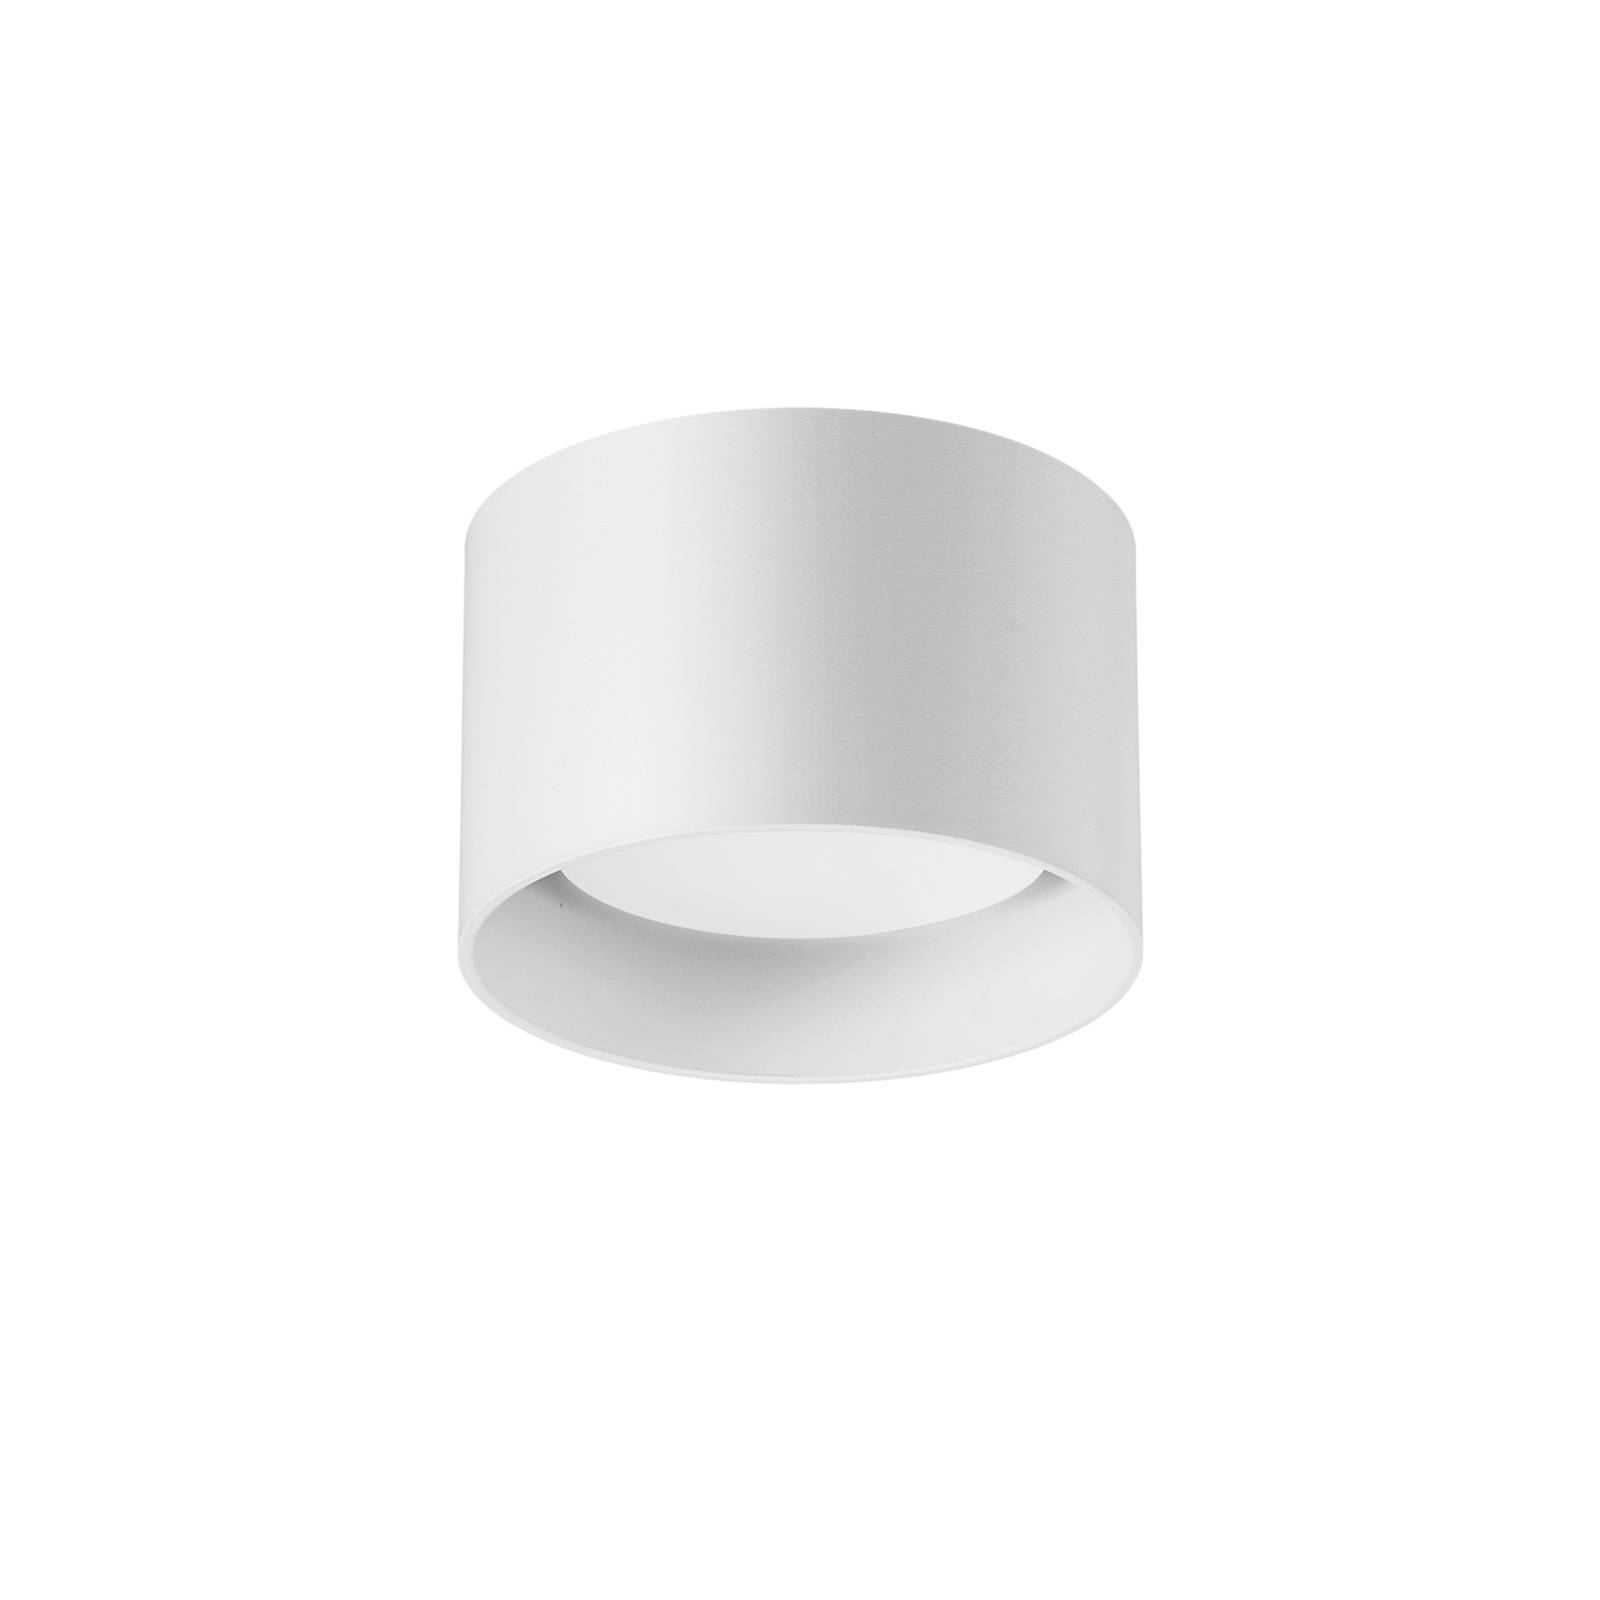 Ideallux Ideal Lux downlight Spike Round, bílý, hliník, Ø 10 cm